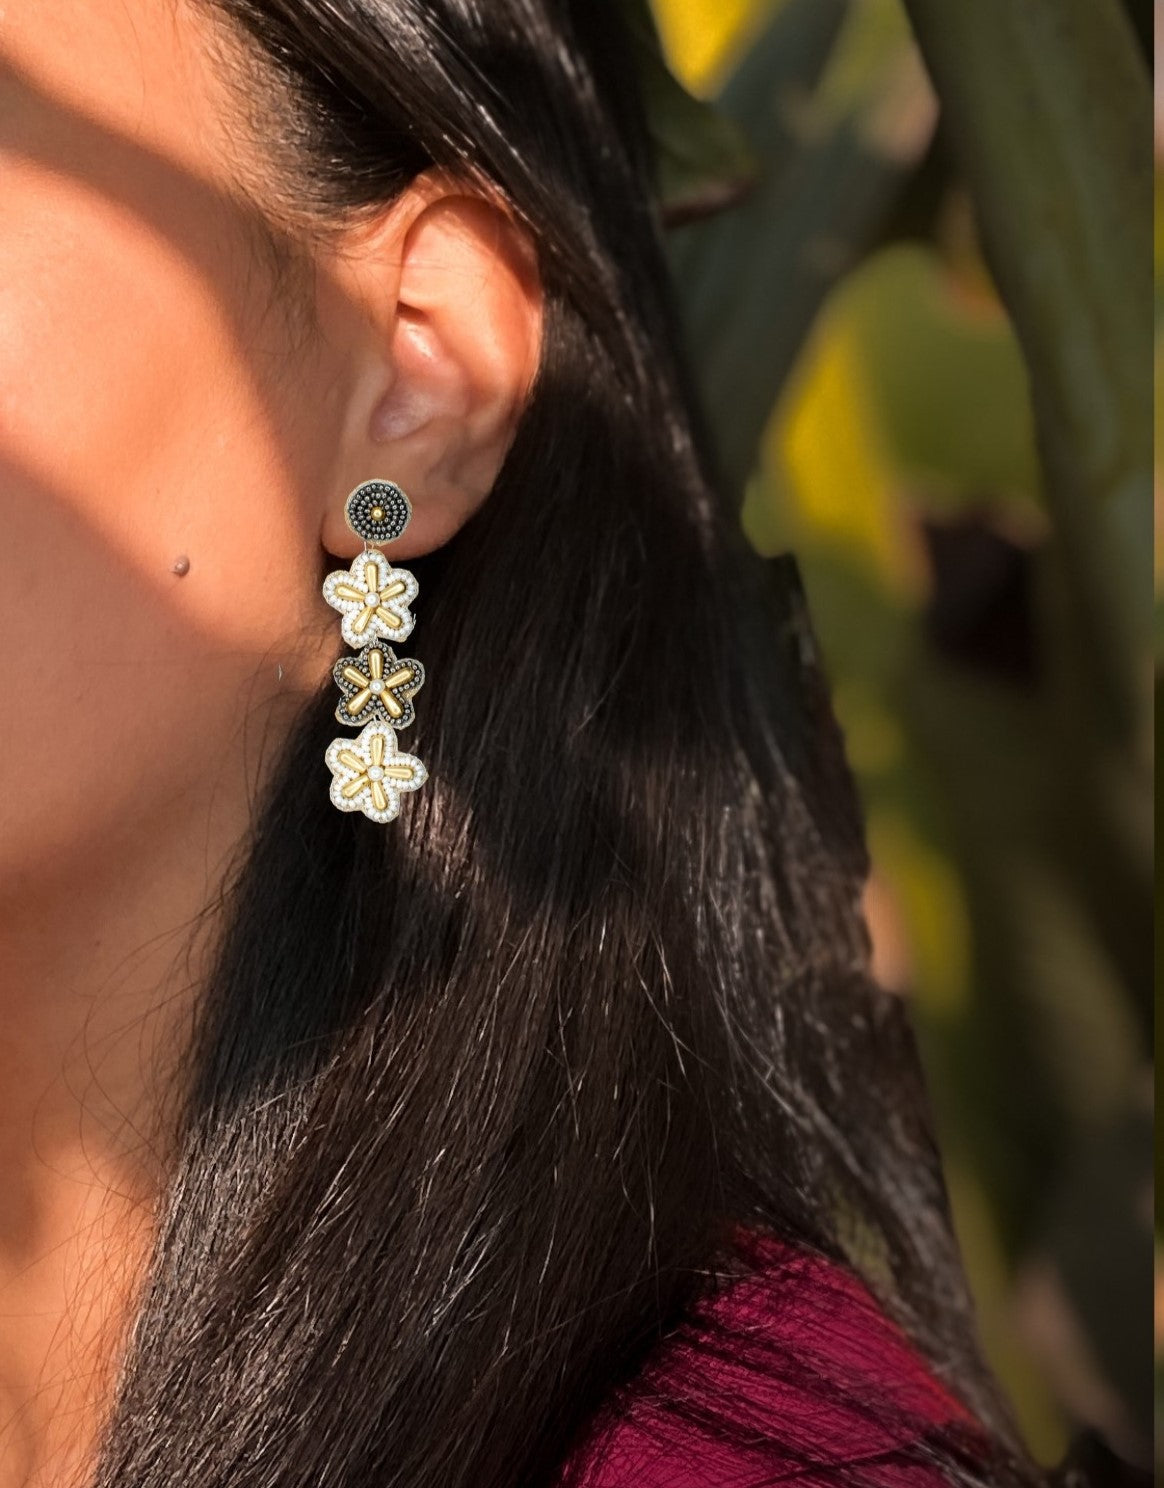 Shreya Embroidered Earrings : Handmade